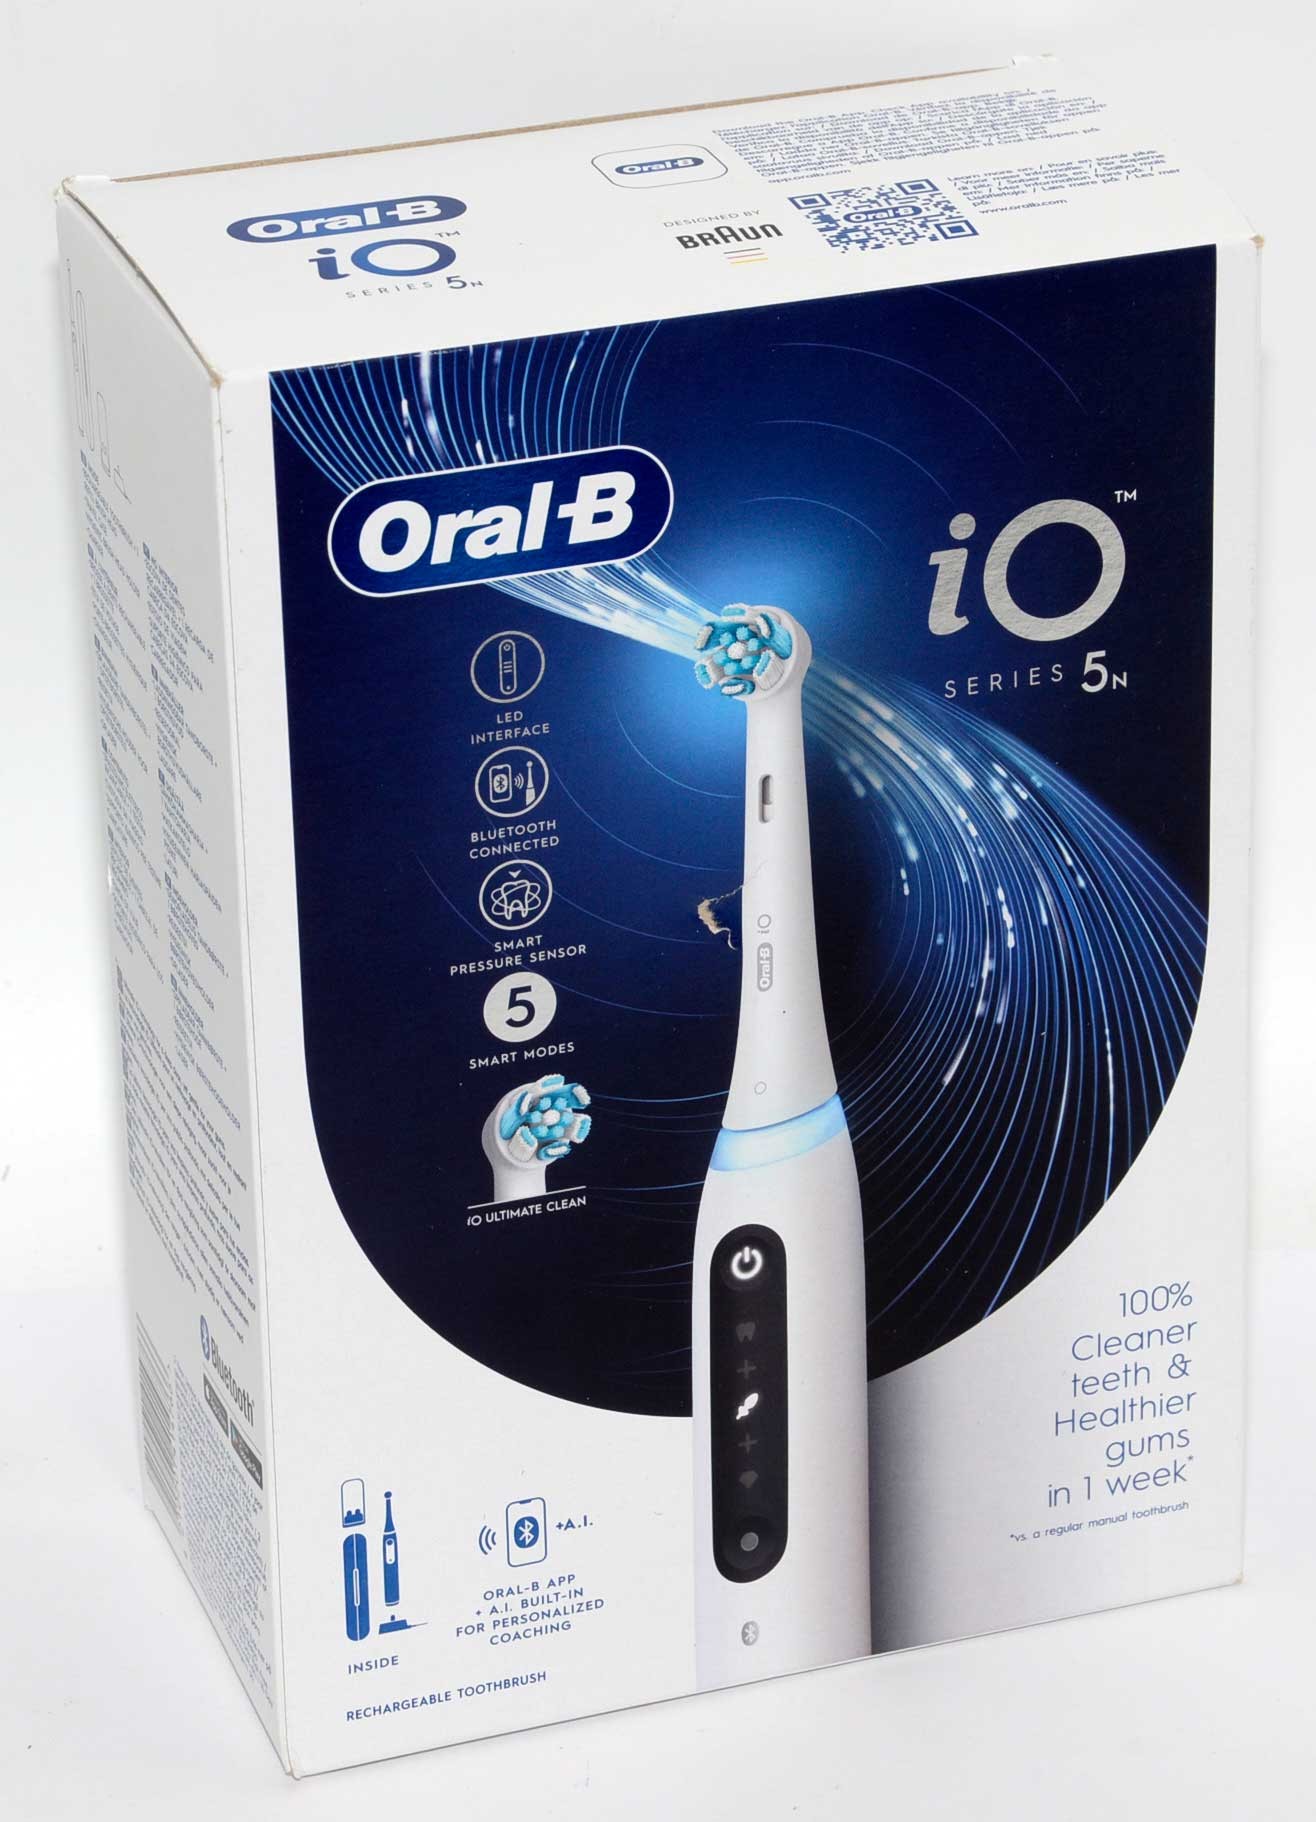 Oral-b Cepillo Dental Eléctrico Con Estuche iO Series 4 Plateado